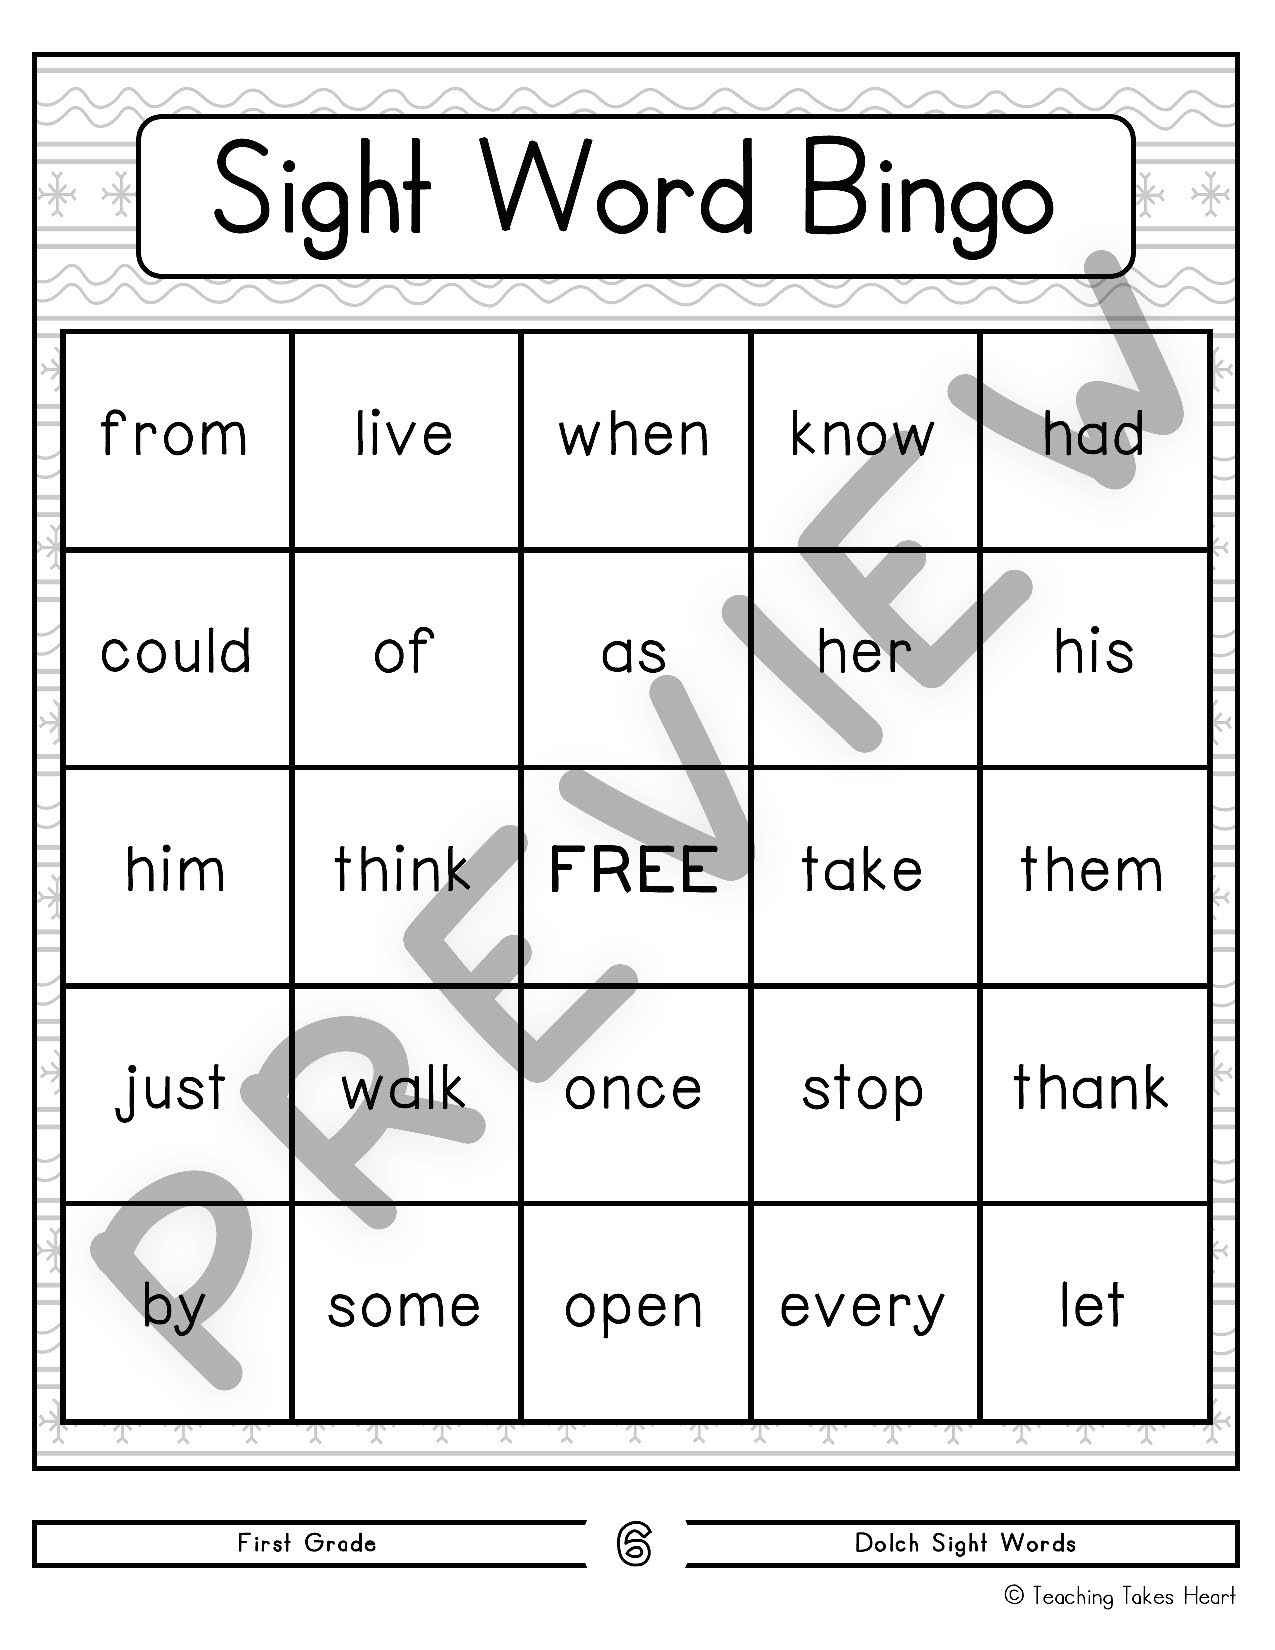 sight-word-bingo-first-grade-teaching-takes-heart